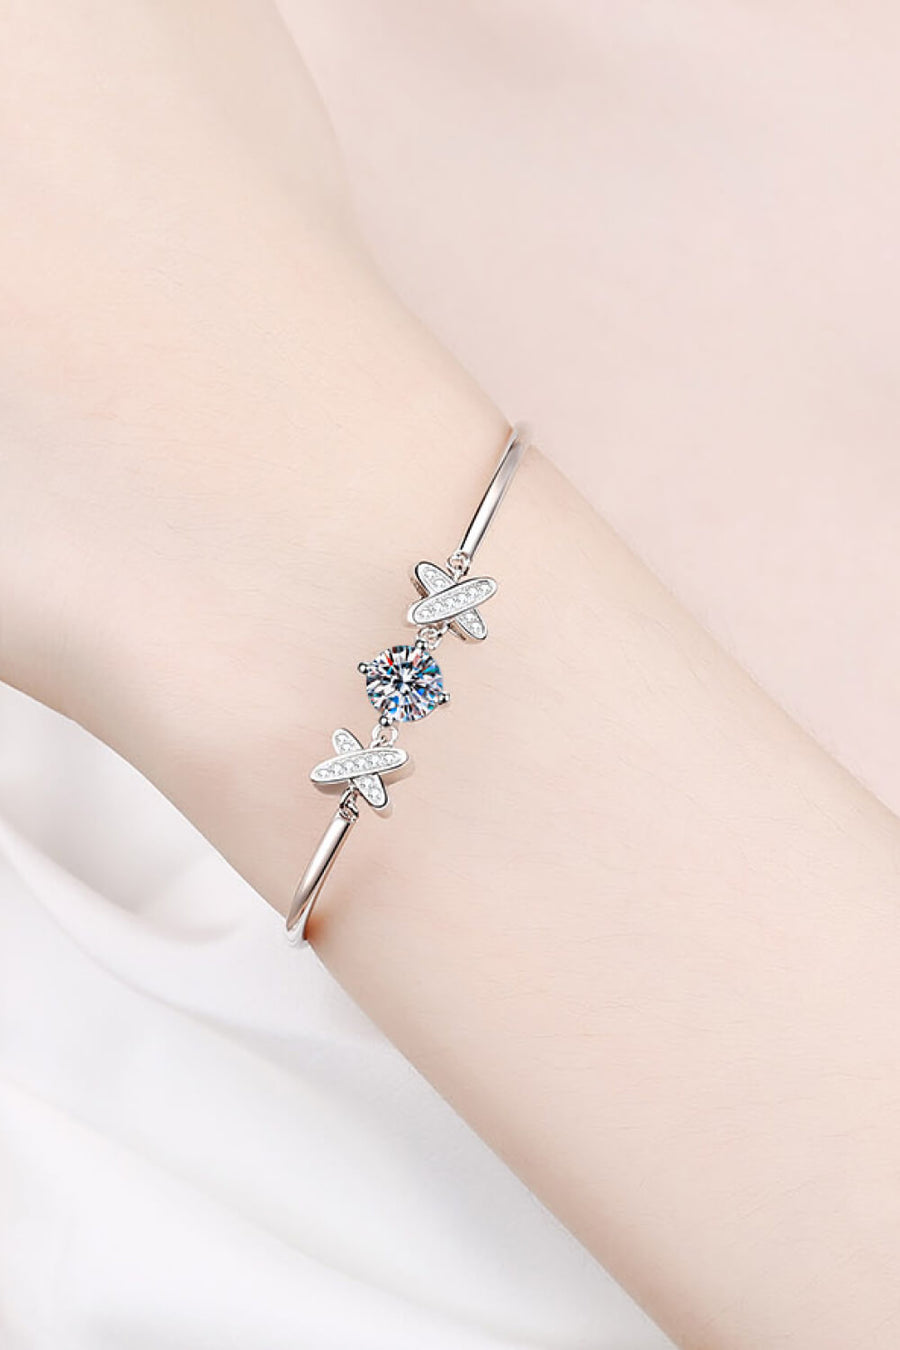 Best Diamond Bracelet Jewelry Gifts for Women | 1 Carat Diamond Bracelet - Happy State of Mind  | MASON New York